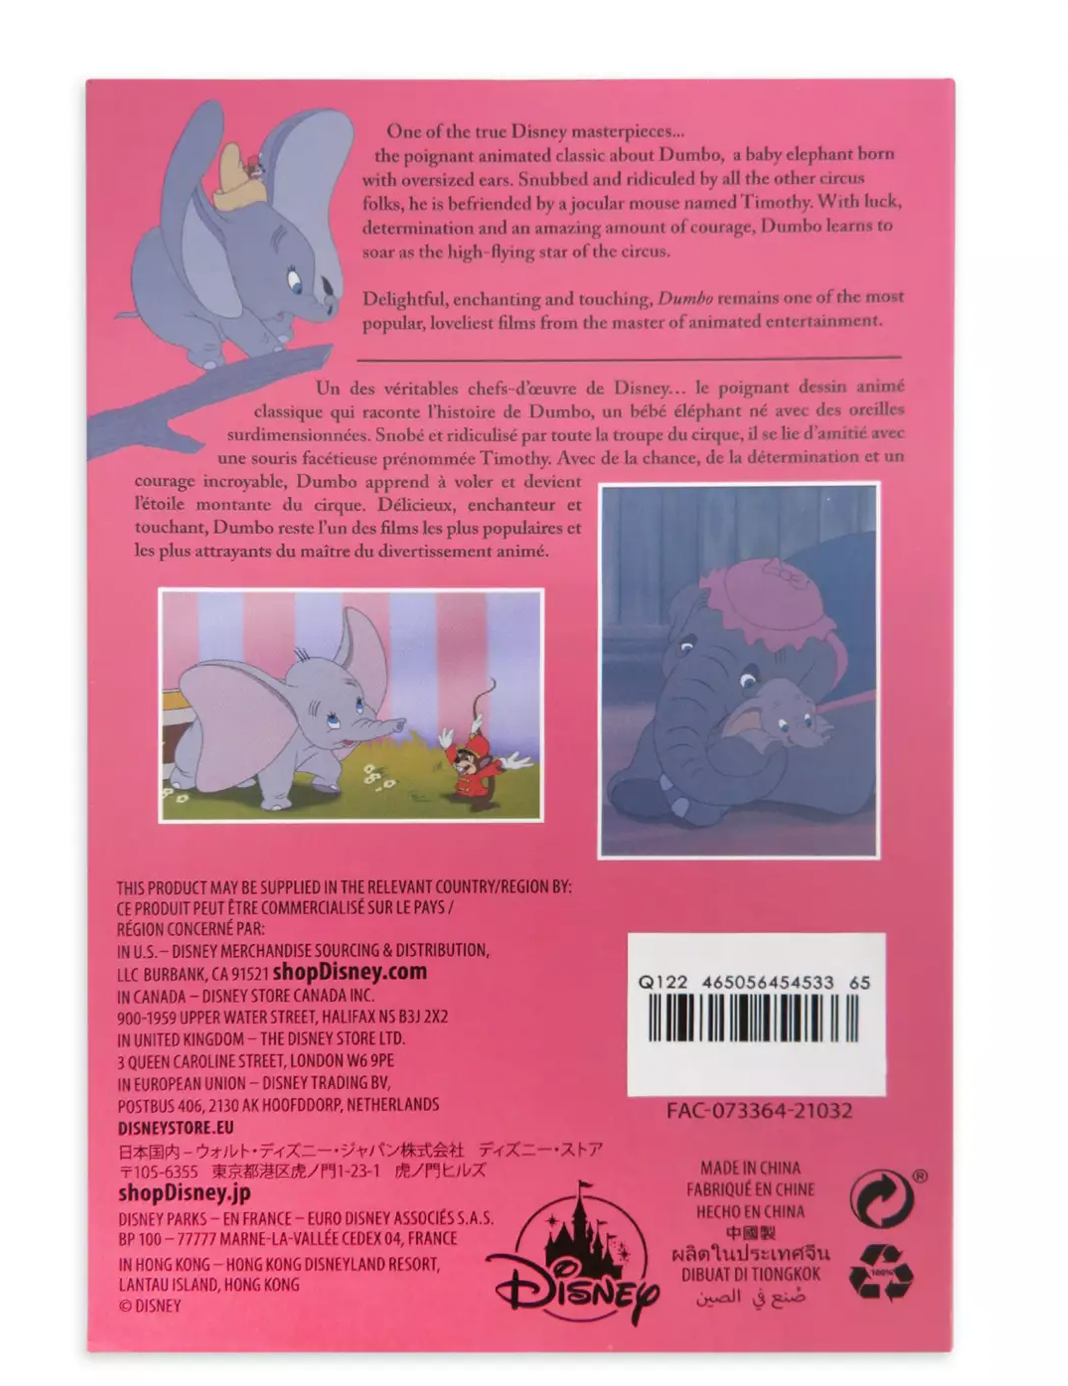 Disney Dumbo VHS Pin Set Pin Limited 80th Anniversary New